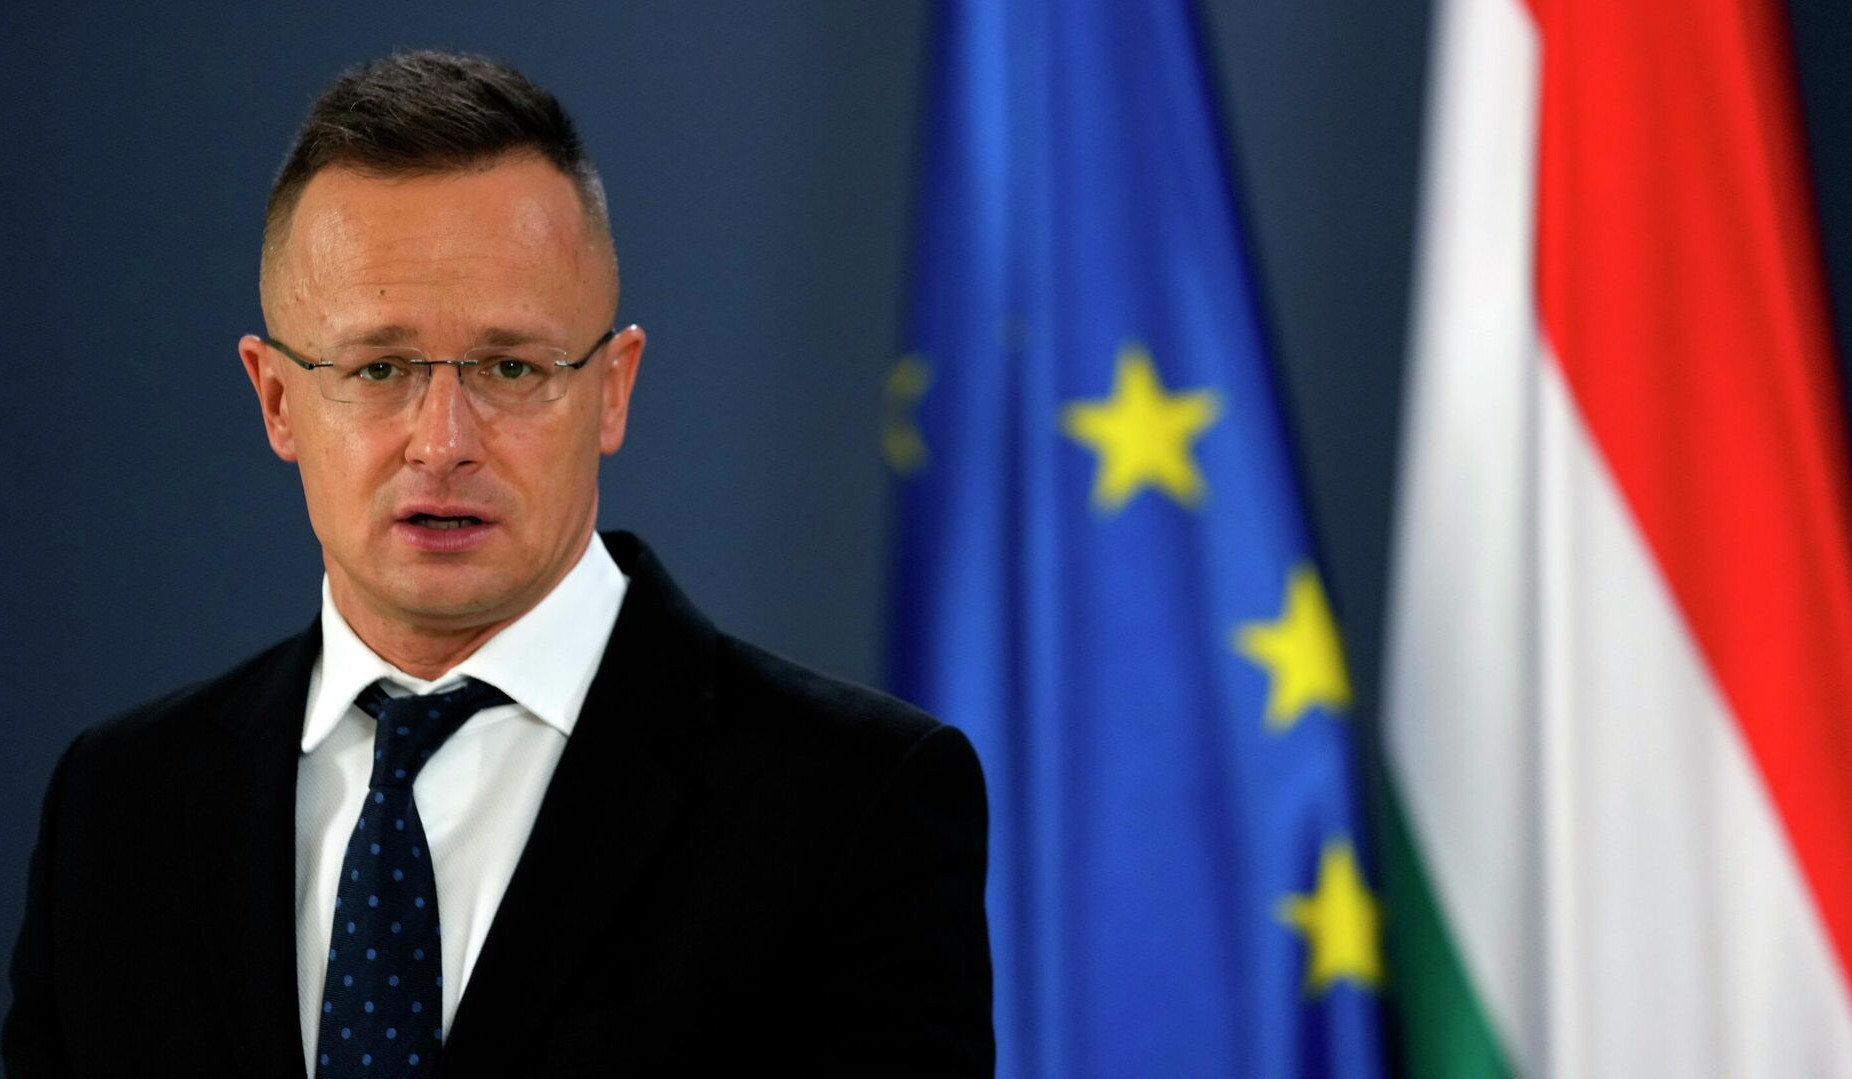 Hungary not to veto thirteenth package of EU sanctions against Russia, Szijjarto